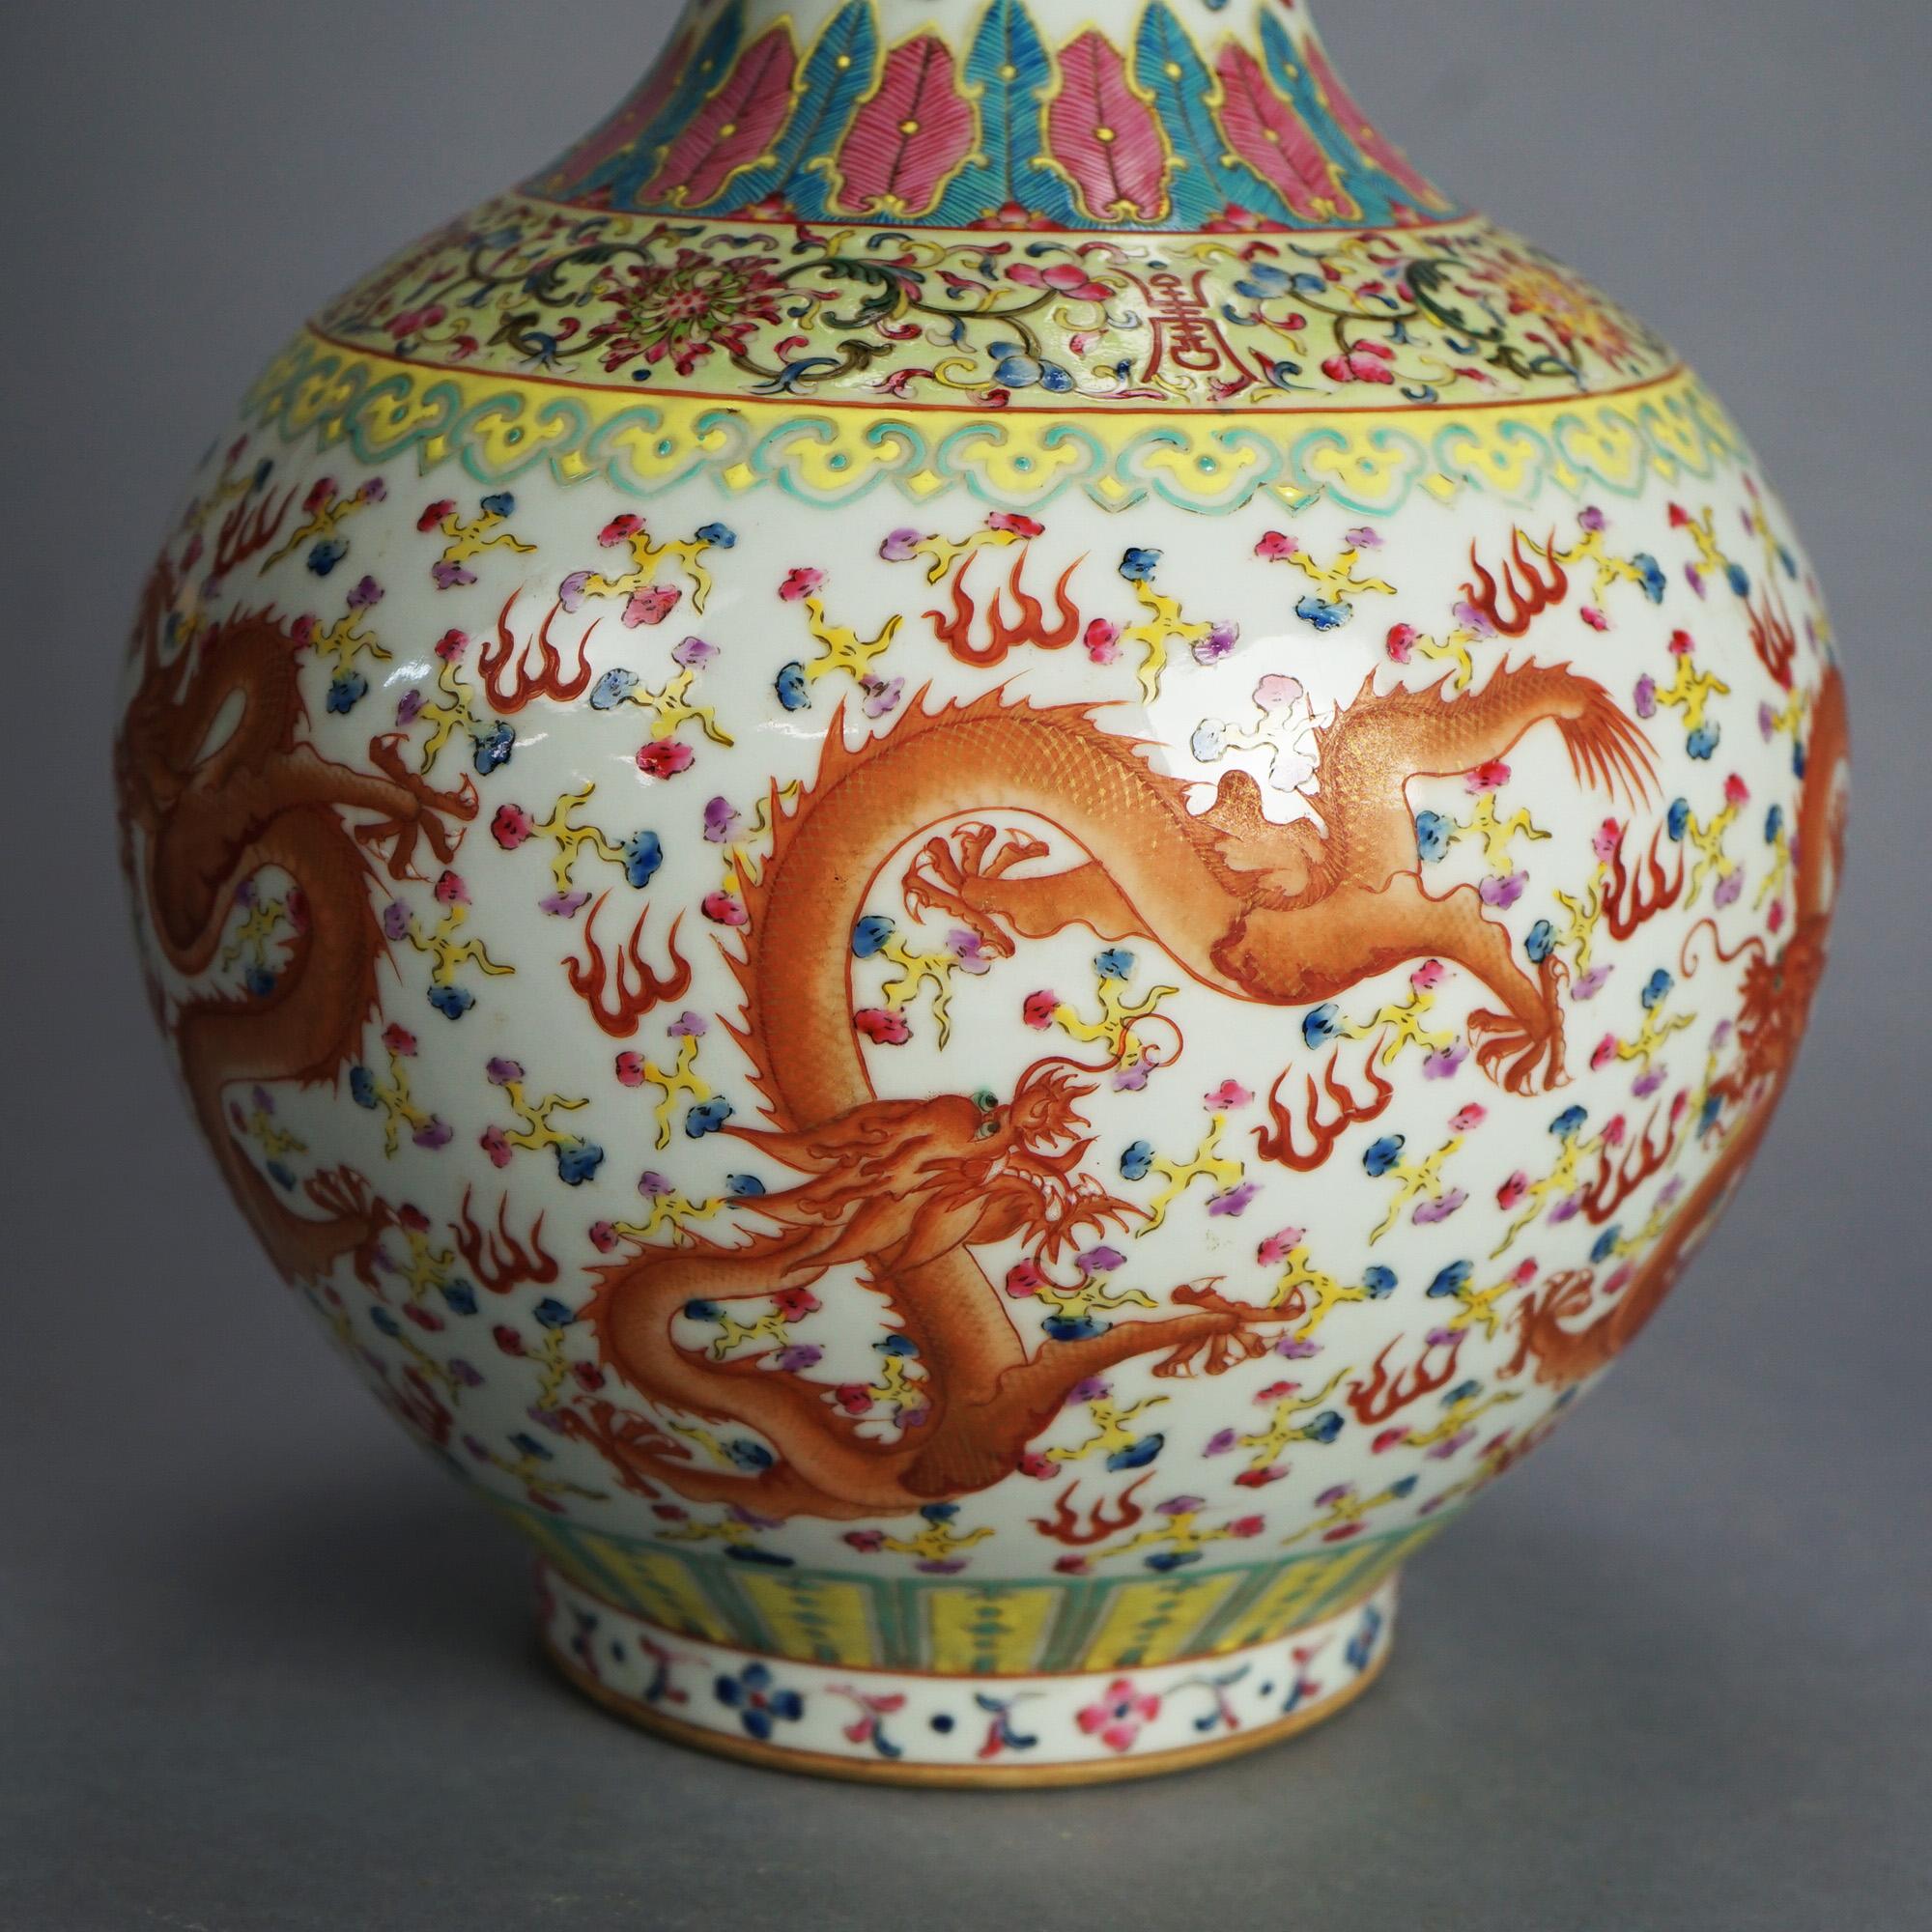 Large Chinese Famille Rose Hu Porcelain Vase with Kangxi Mark, Garden Flowers & Dragons 20thC

Measures - 16.75